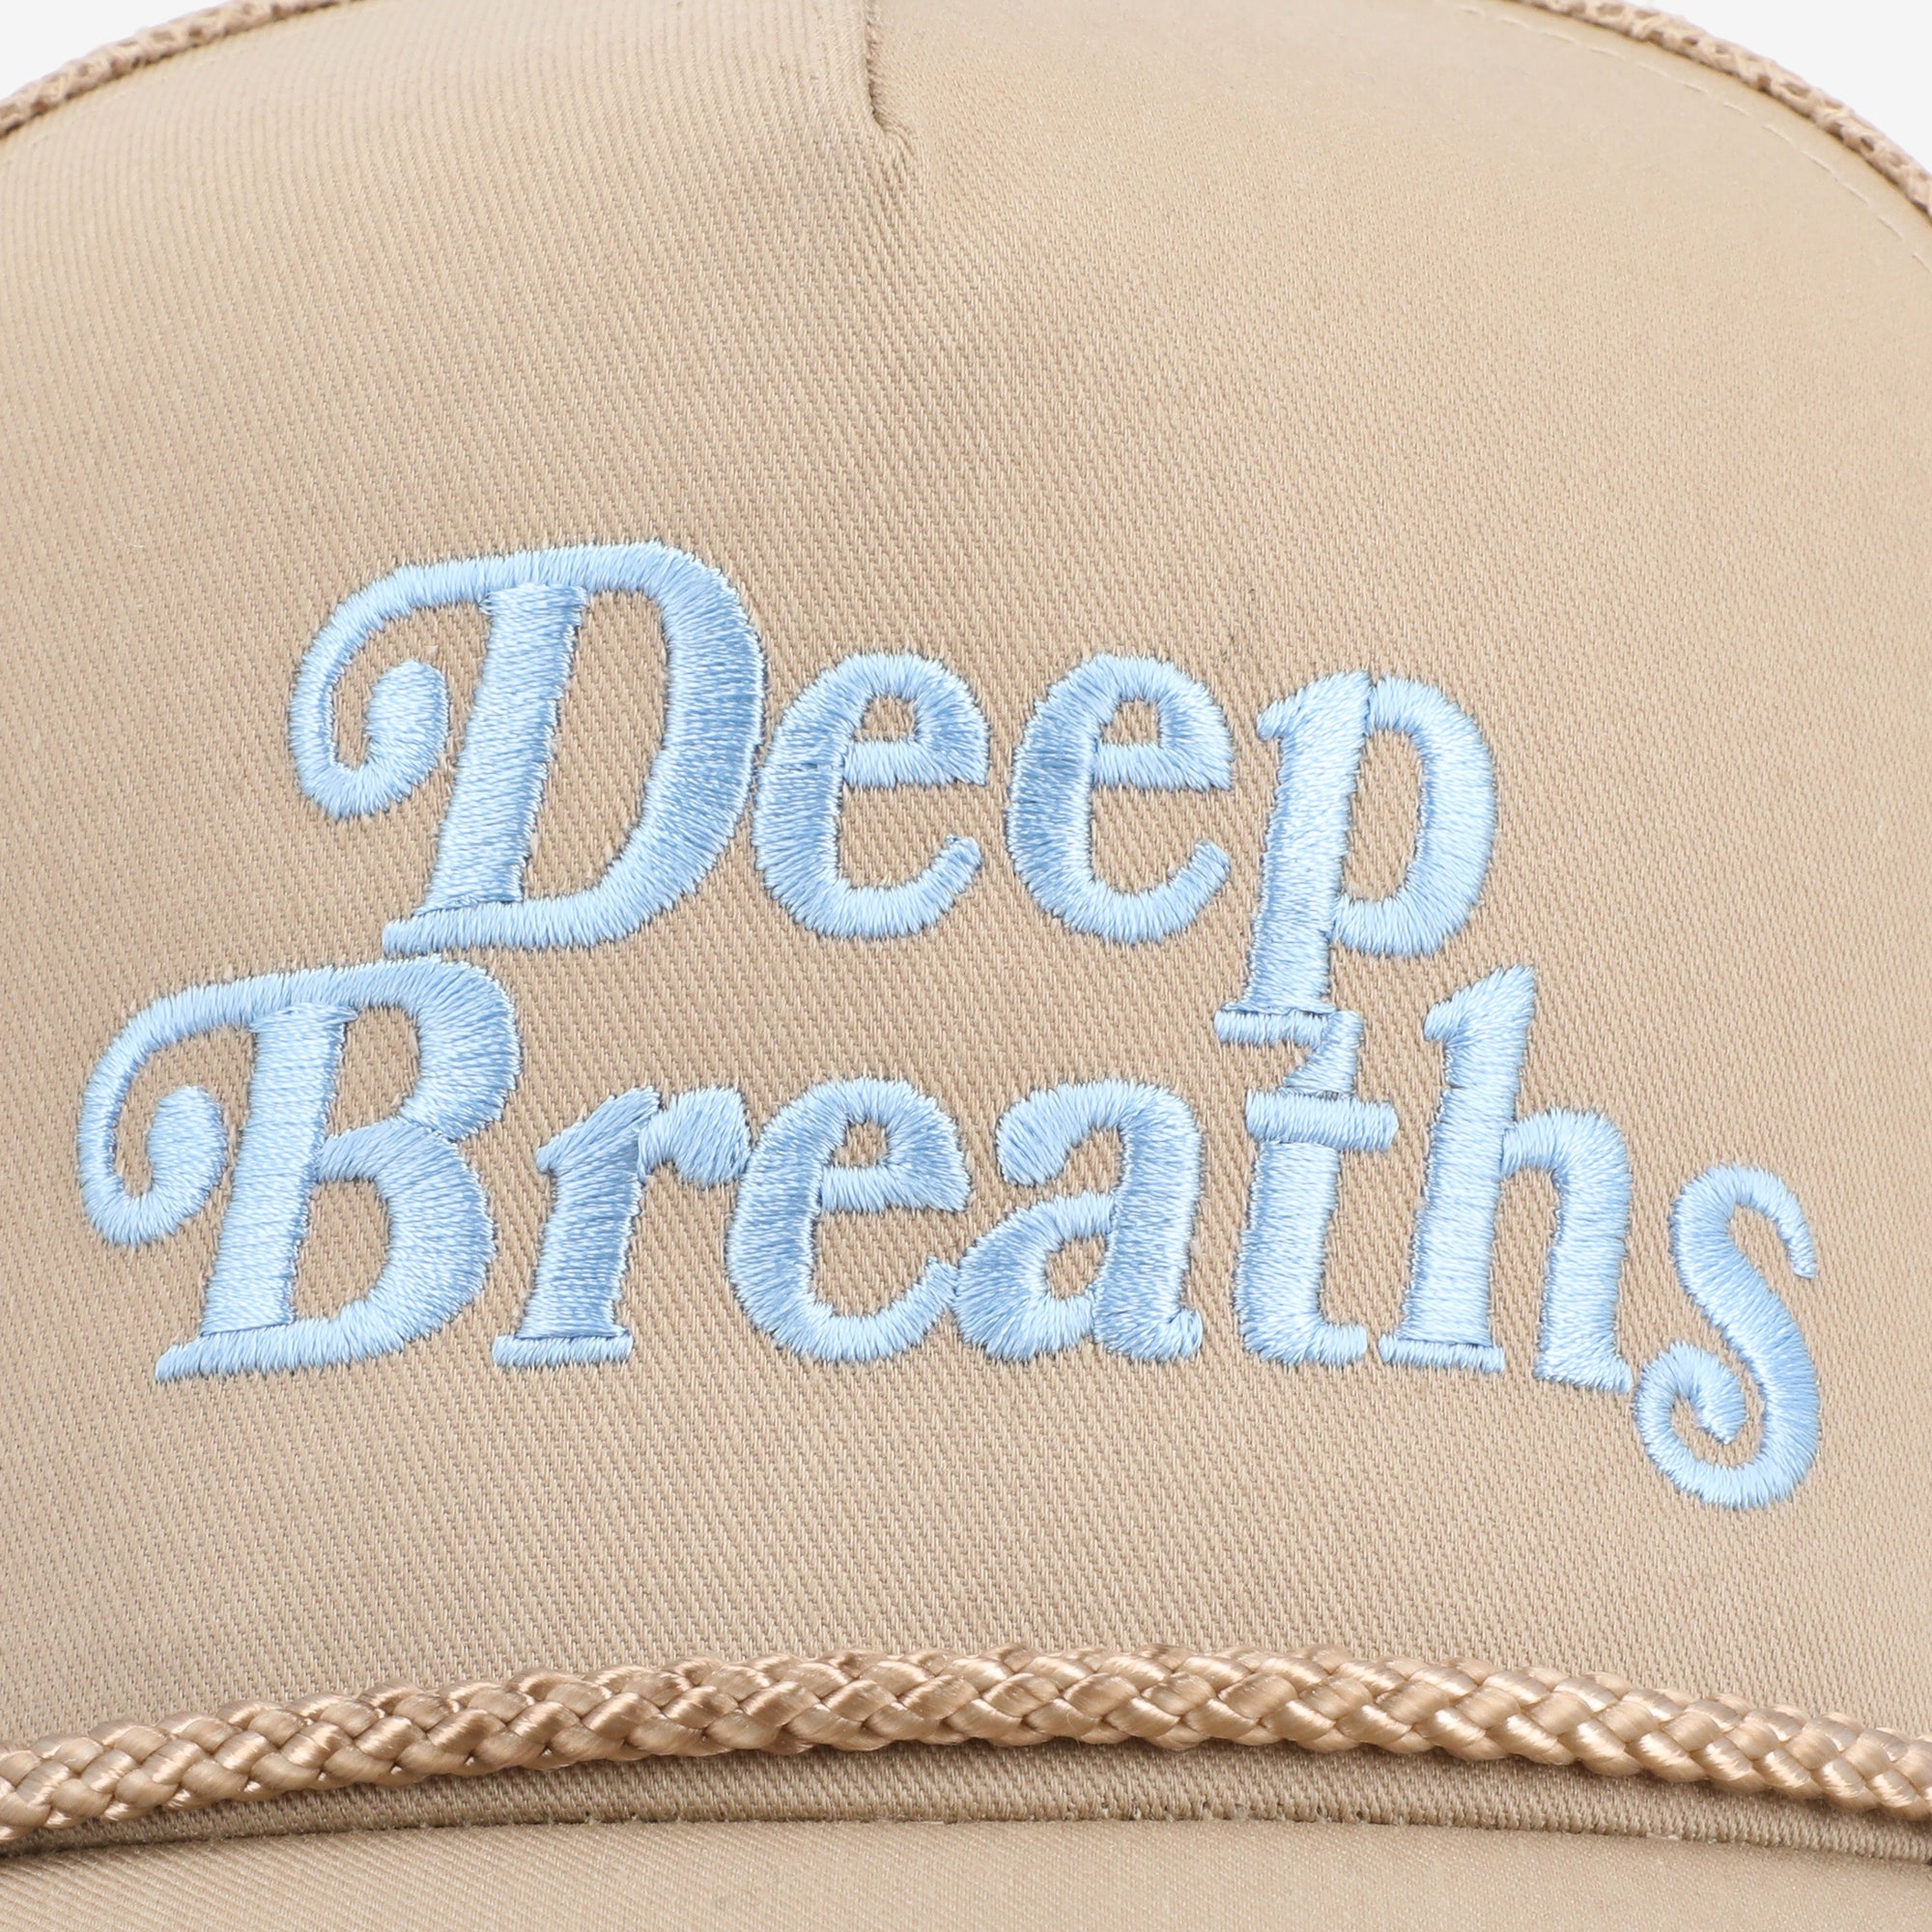 Deep Breaths Hat in Sand